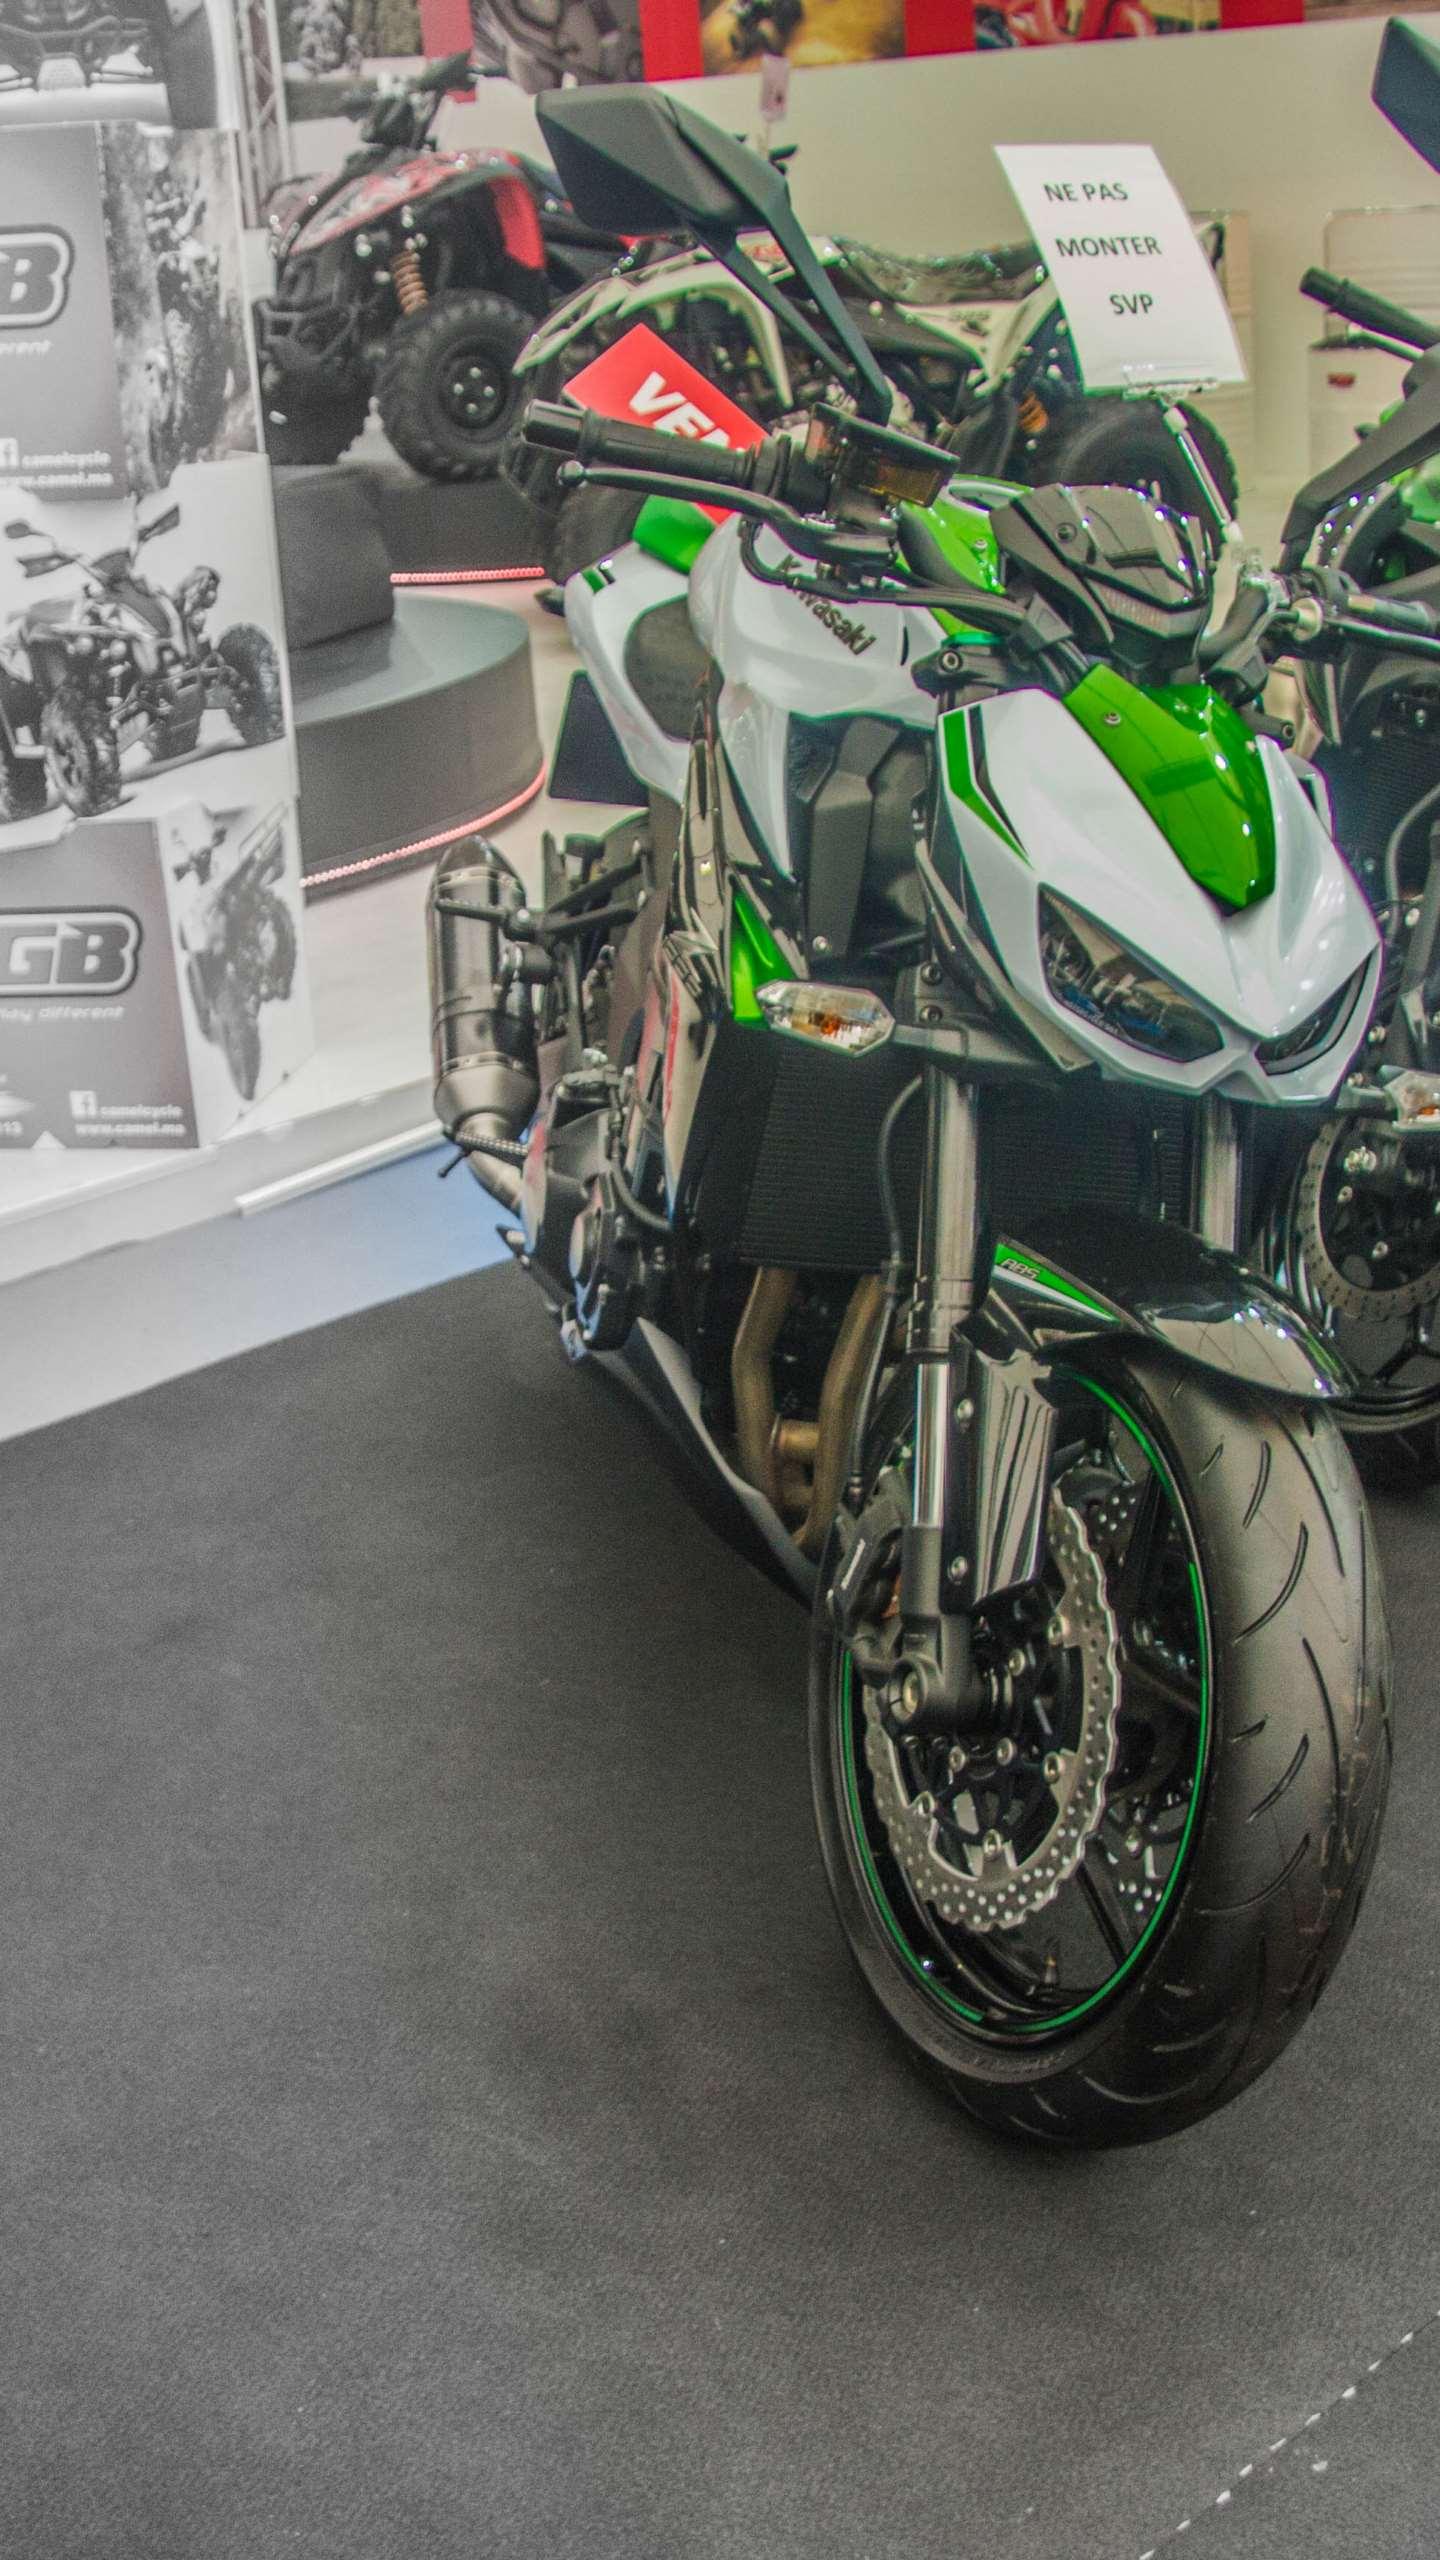 2014 Kawasaki Z1000 wallpapers – 06 | IAMABIKER - Everything Motorcycle!